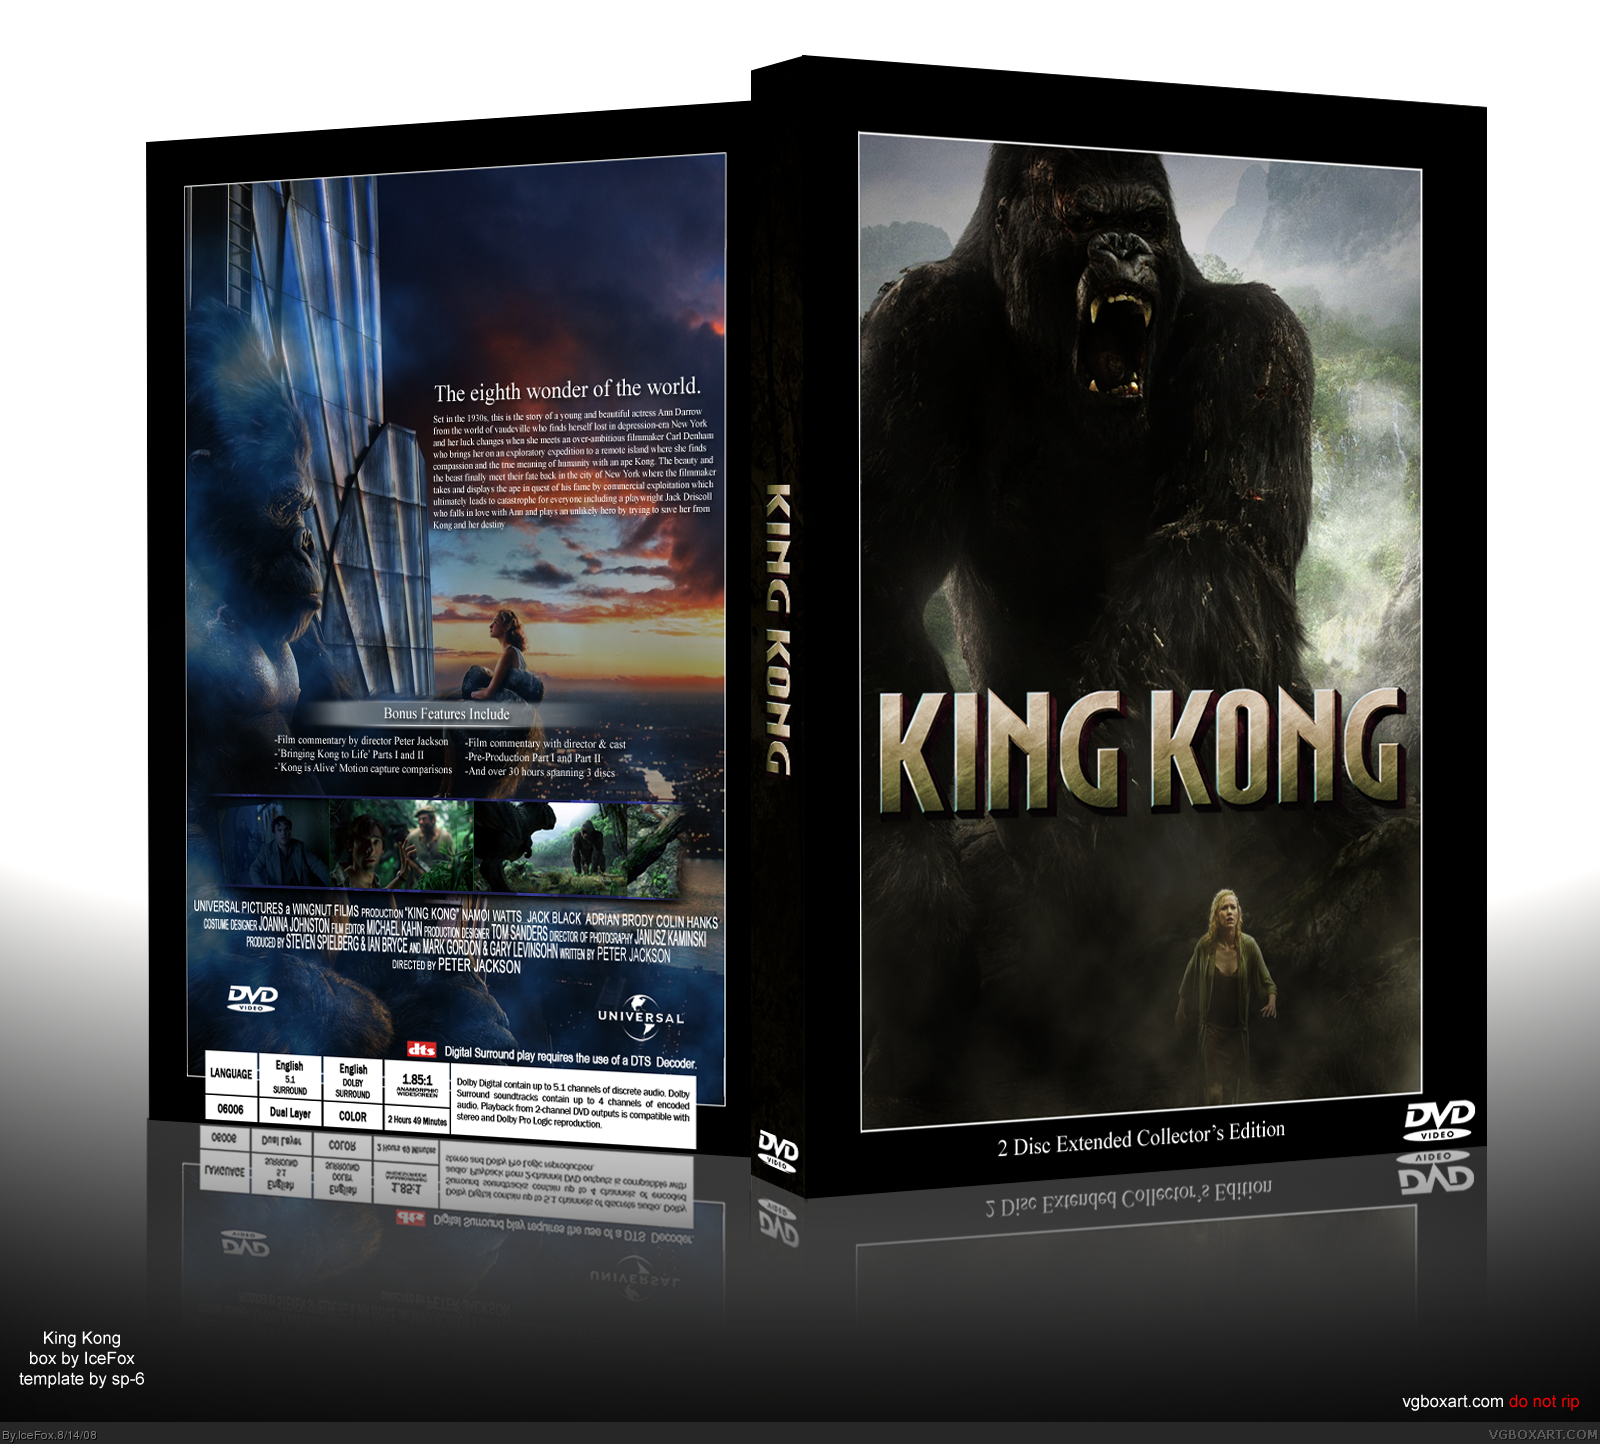 King Kong box cover